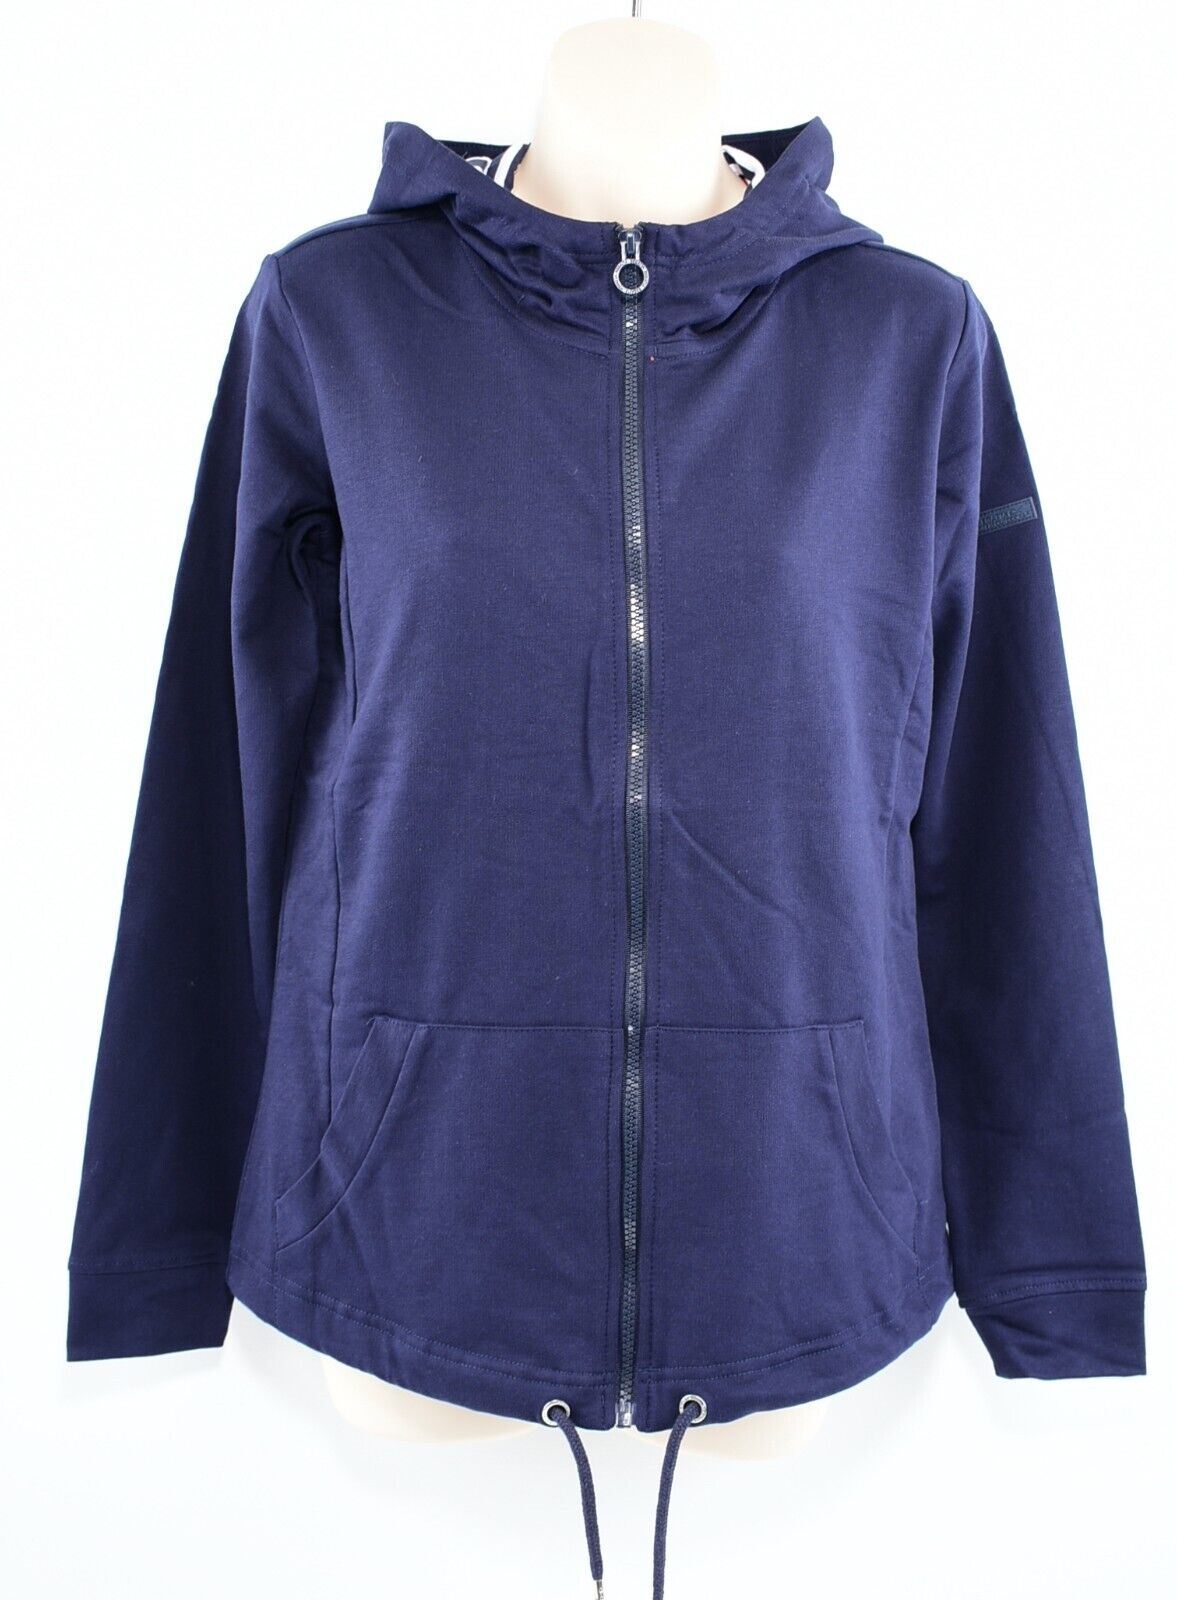 REGATTA Womens BAYARMA Zip Hoodie Jacket, Navy Blue, size XL /UK 16